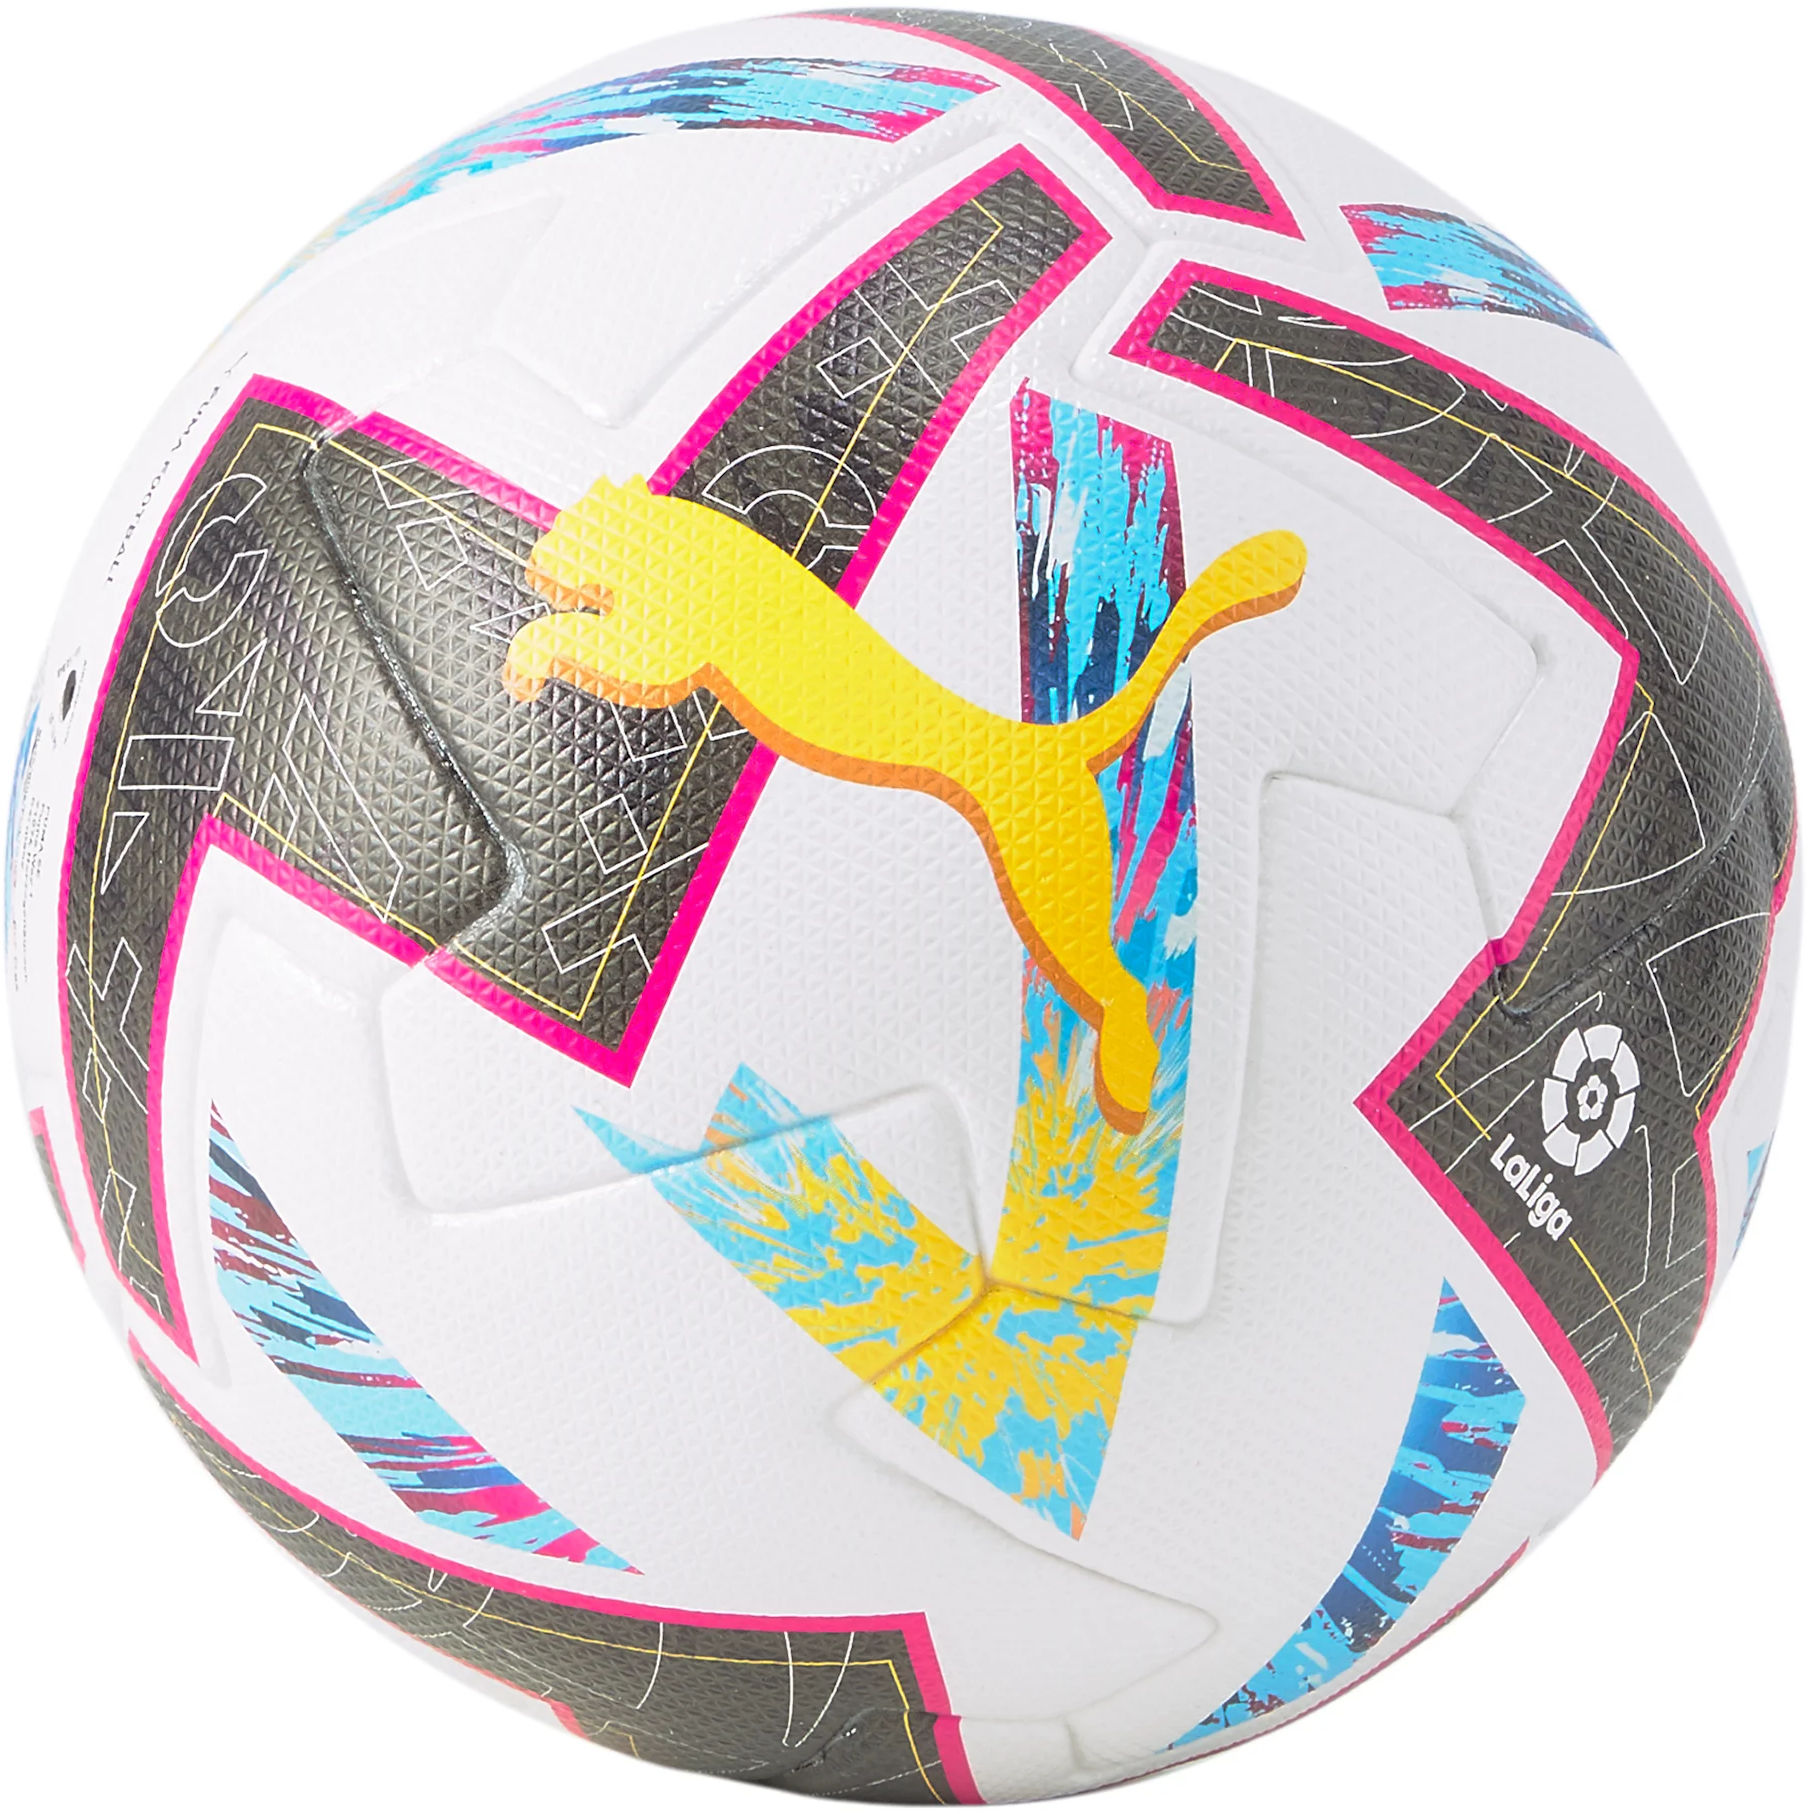 Pallo Puma Orbita LaLiga 1 (FIFA Quality Pro)